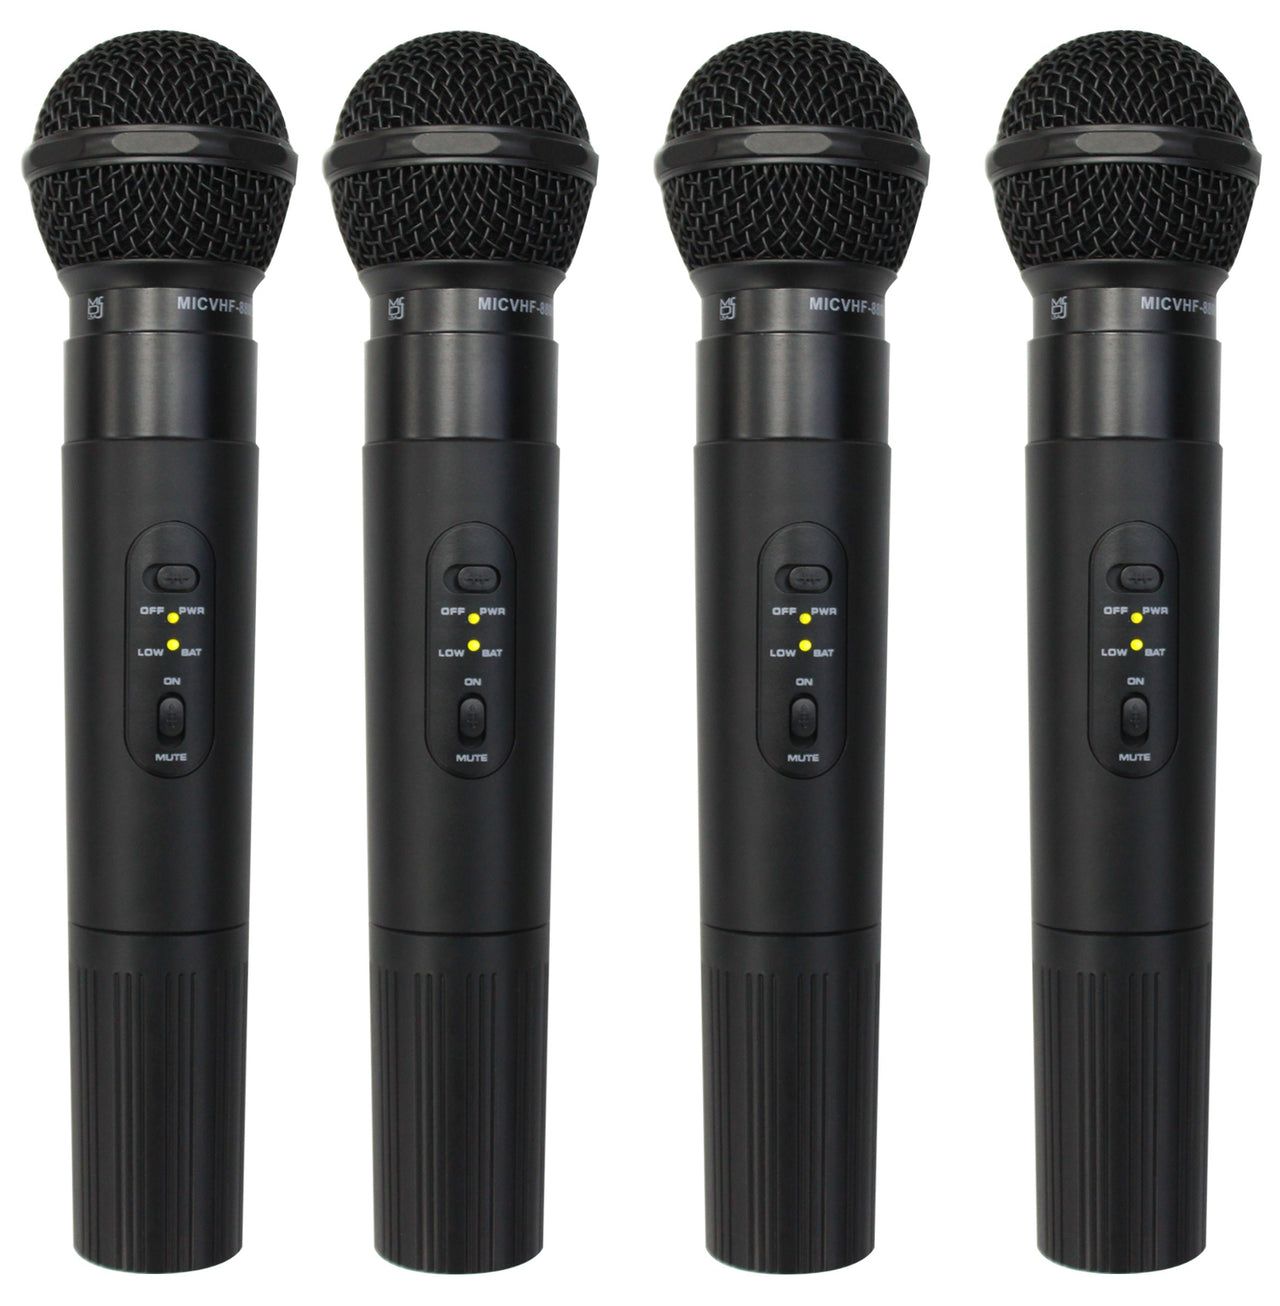 2 Mr Dj MICVHF-8800 4 Channel Professional PA/DJ/KTV/Karaoke VHF Handheld Wireless Microphone System with Digital Receiver